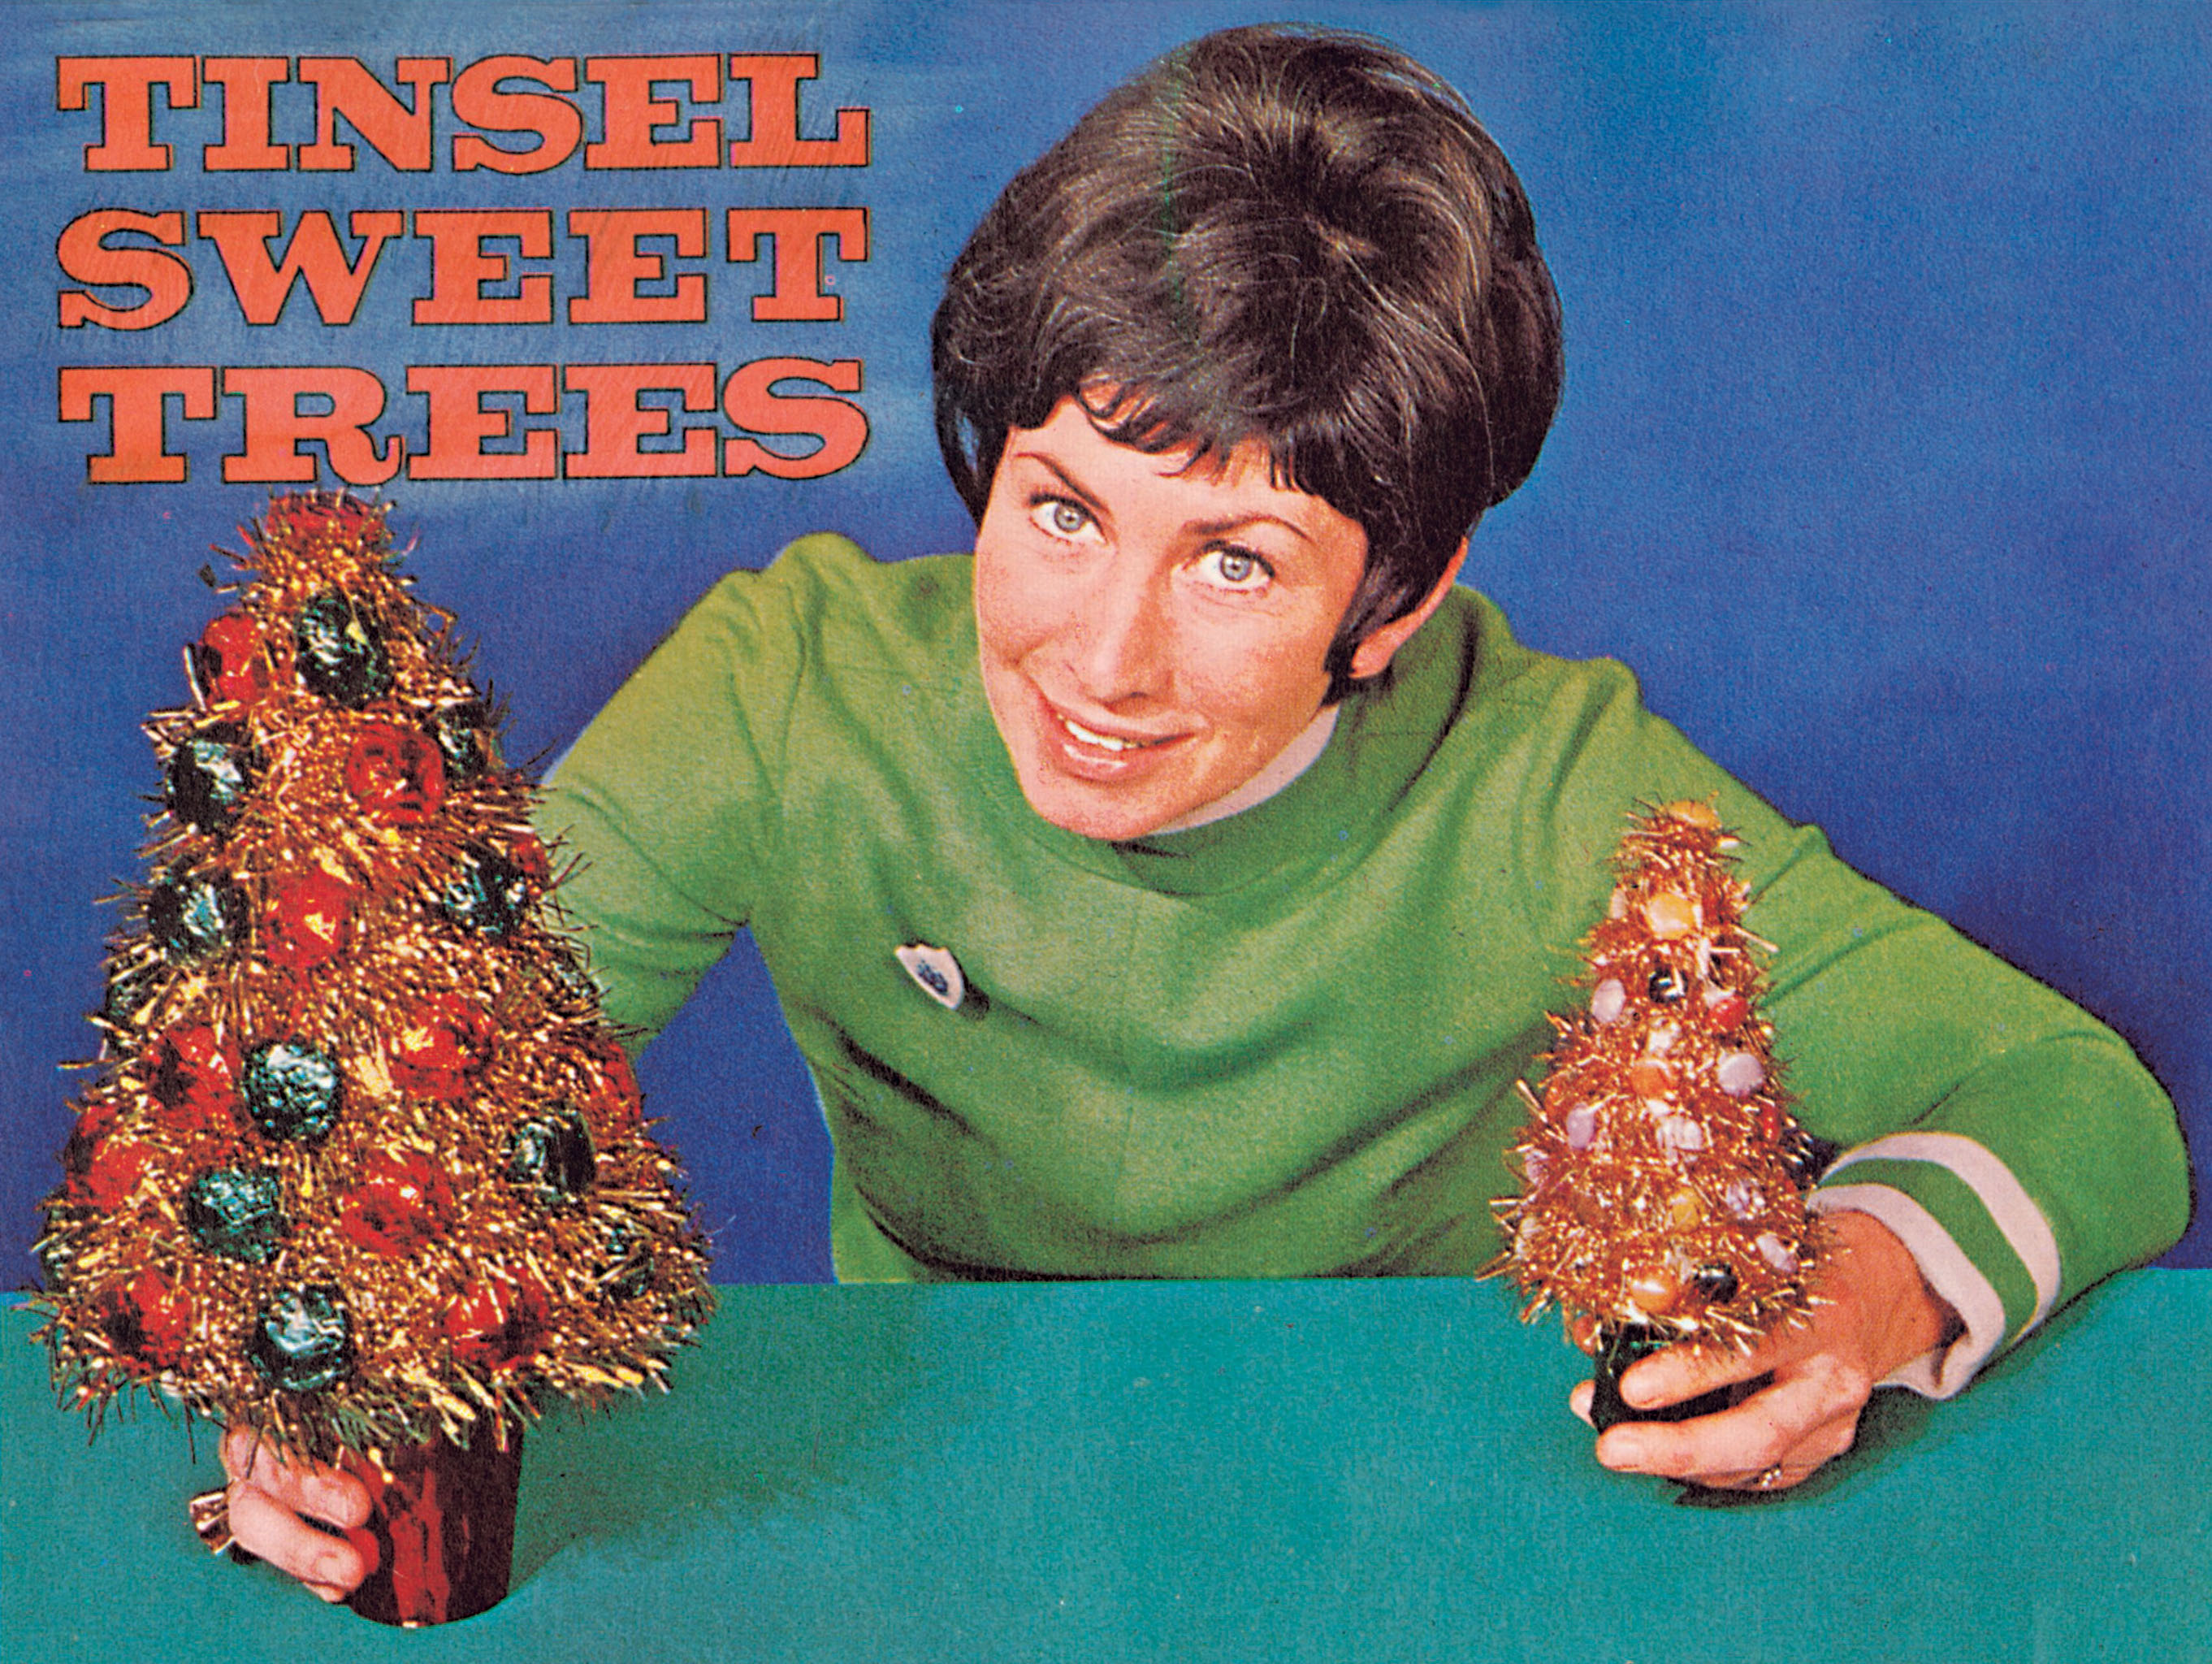 A presenter holds up a homemade Christmas tree